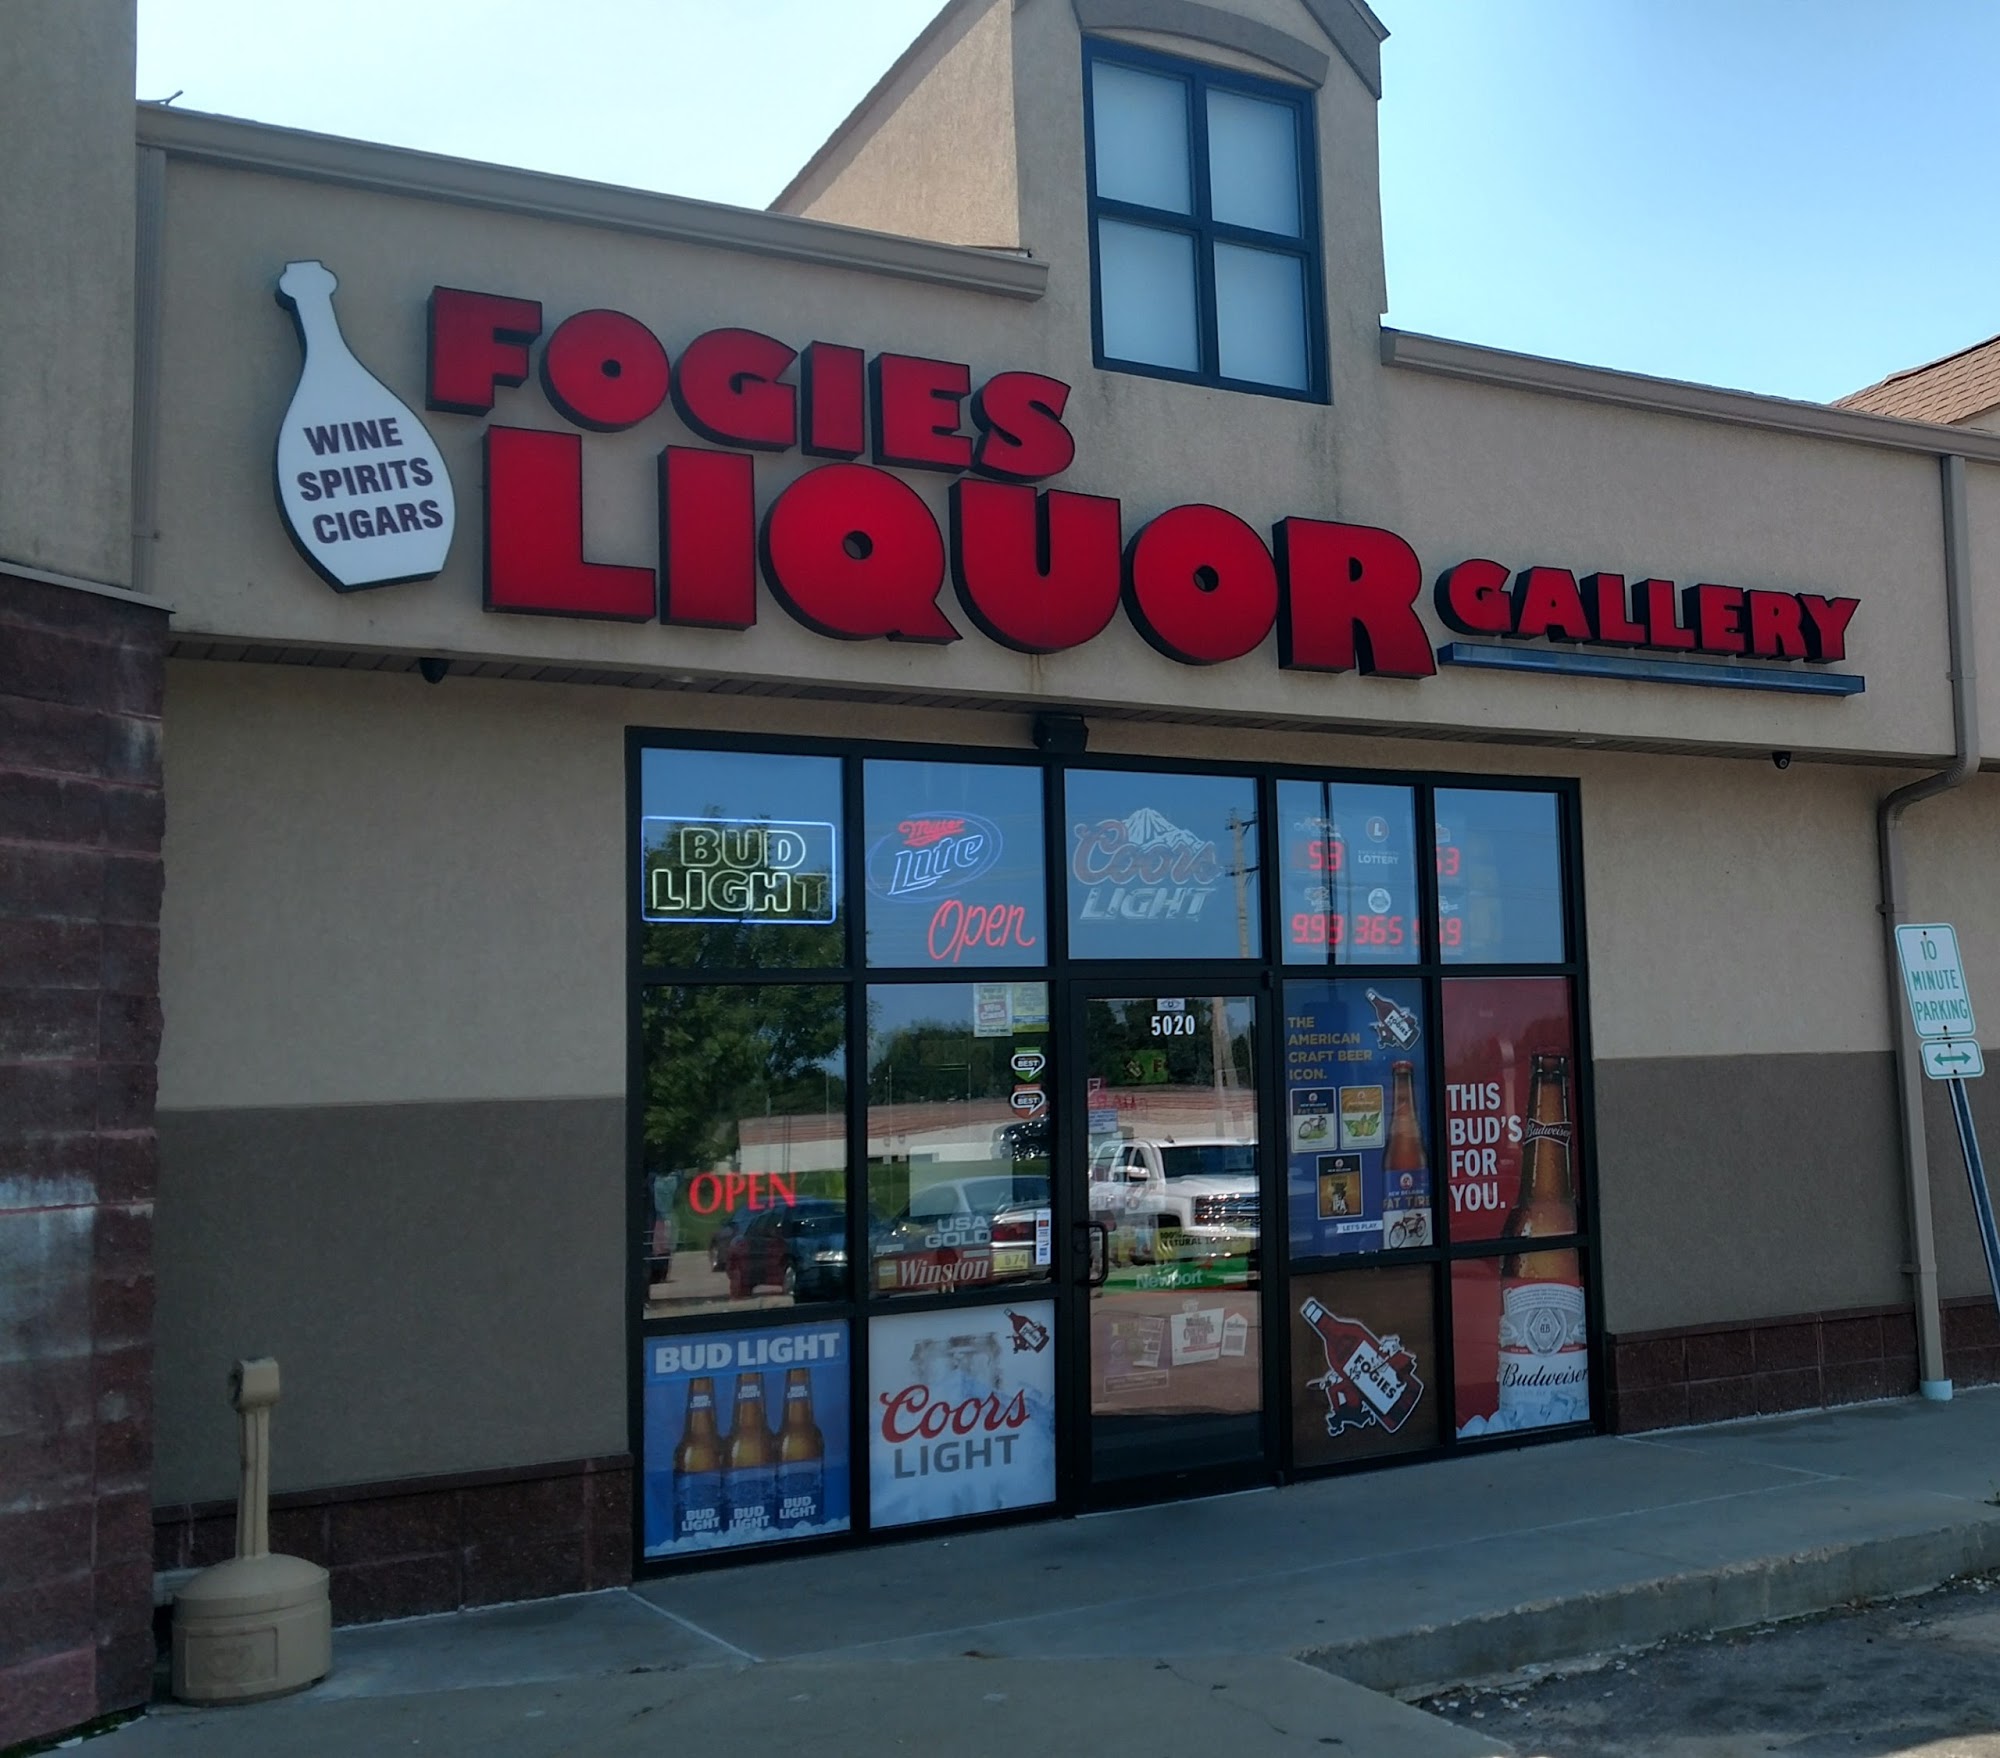 Fogies Liquor Gallery